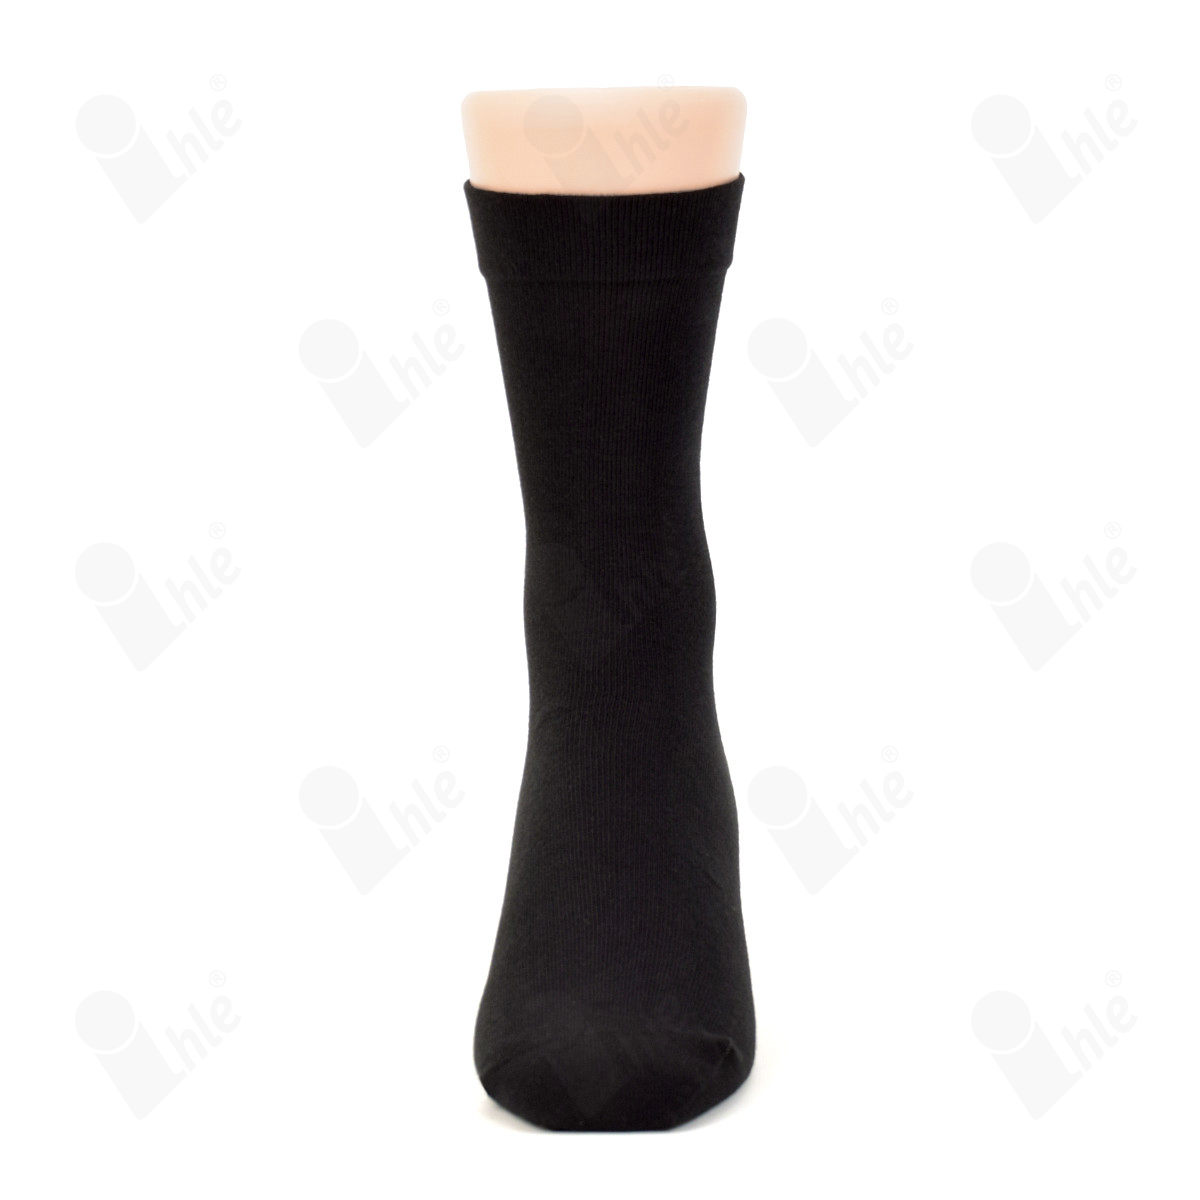 Ihle Socke klassisch schwarz Gr. 43-46